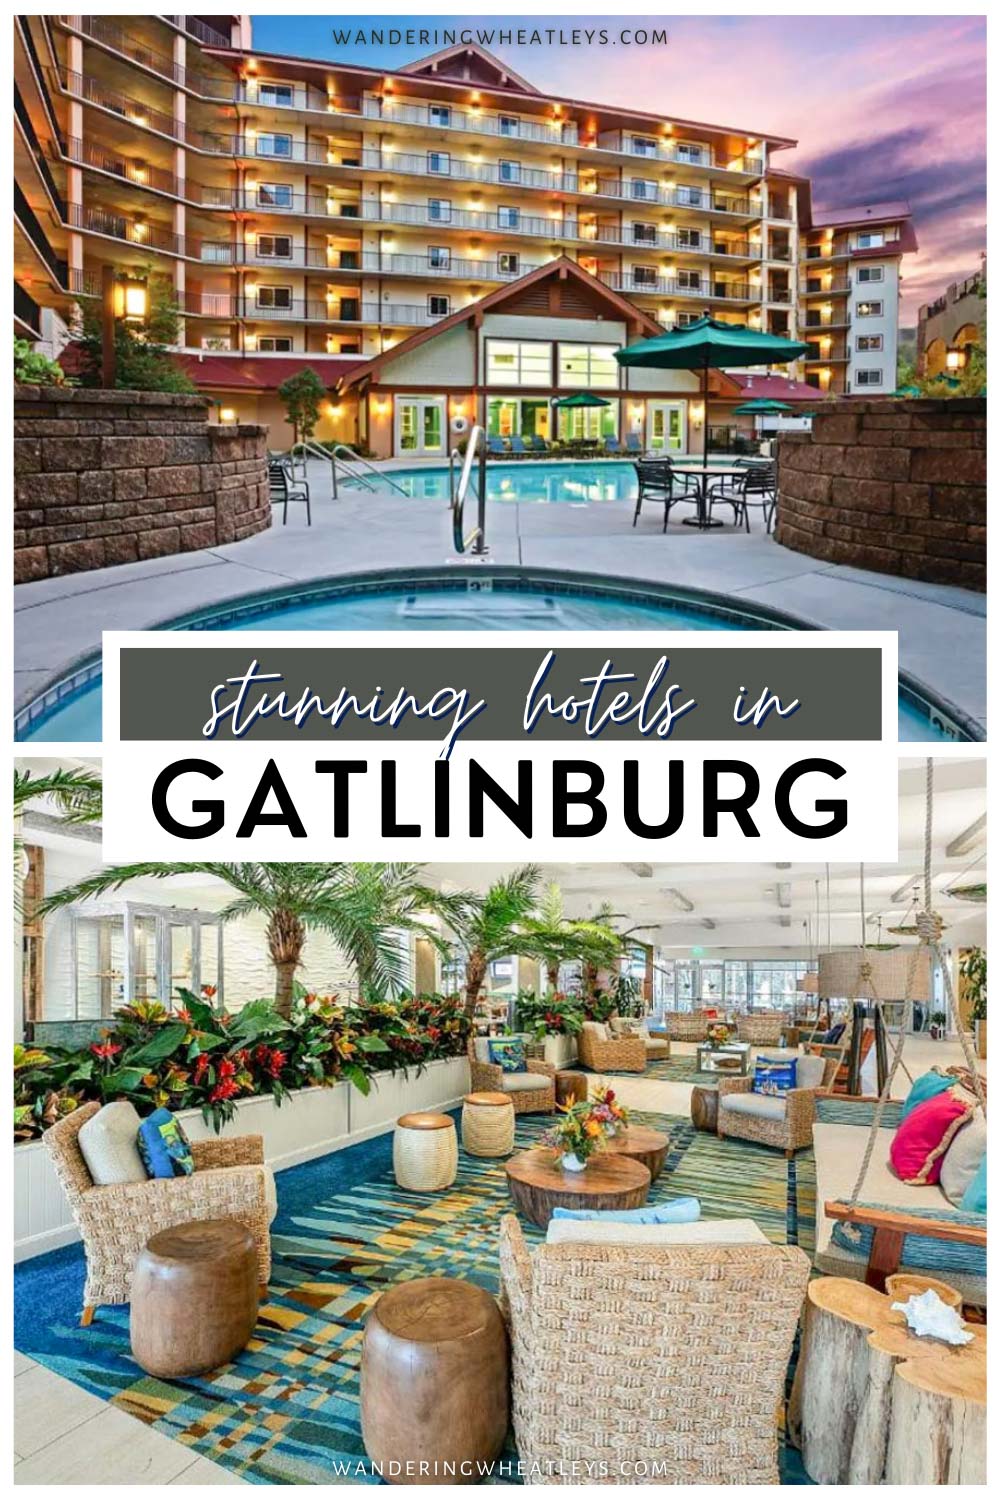 The Best Hotels in Gatlinburg, Tennessee